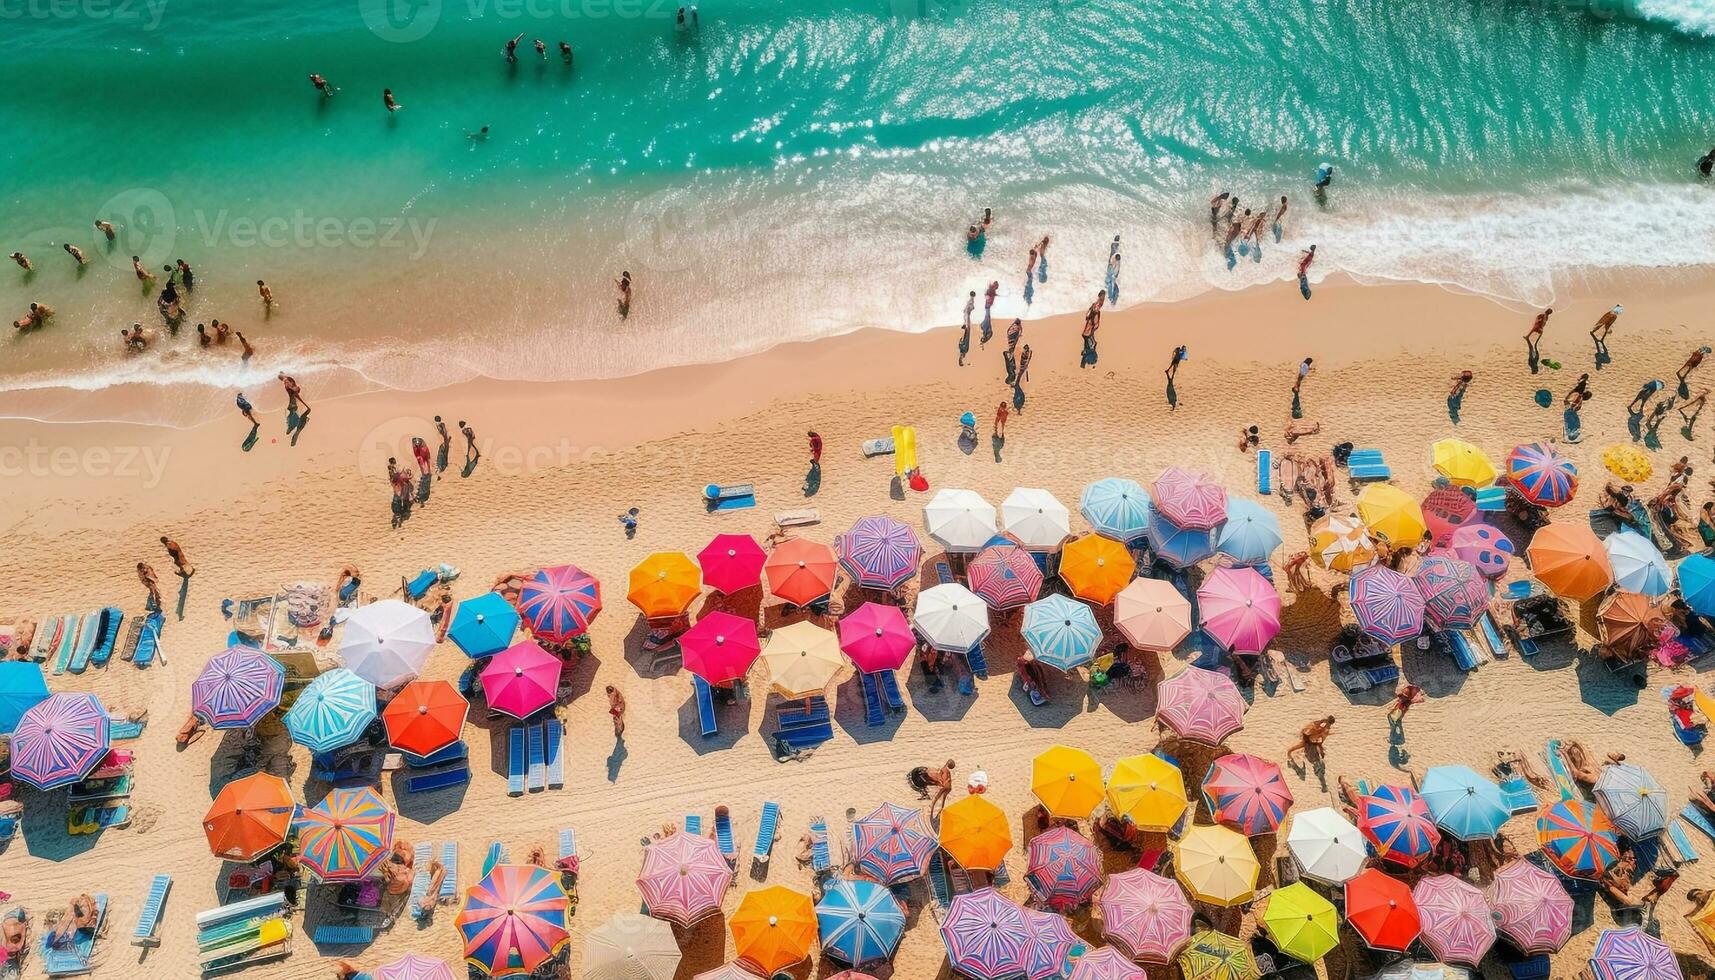 Crowded beach, multi colored umbrellas, fun in sun generated by AI photo